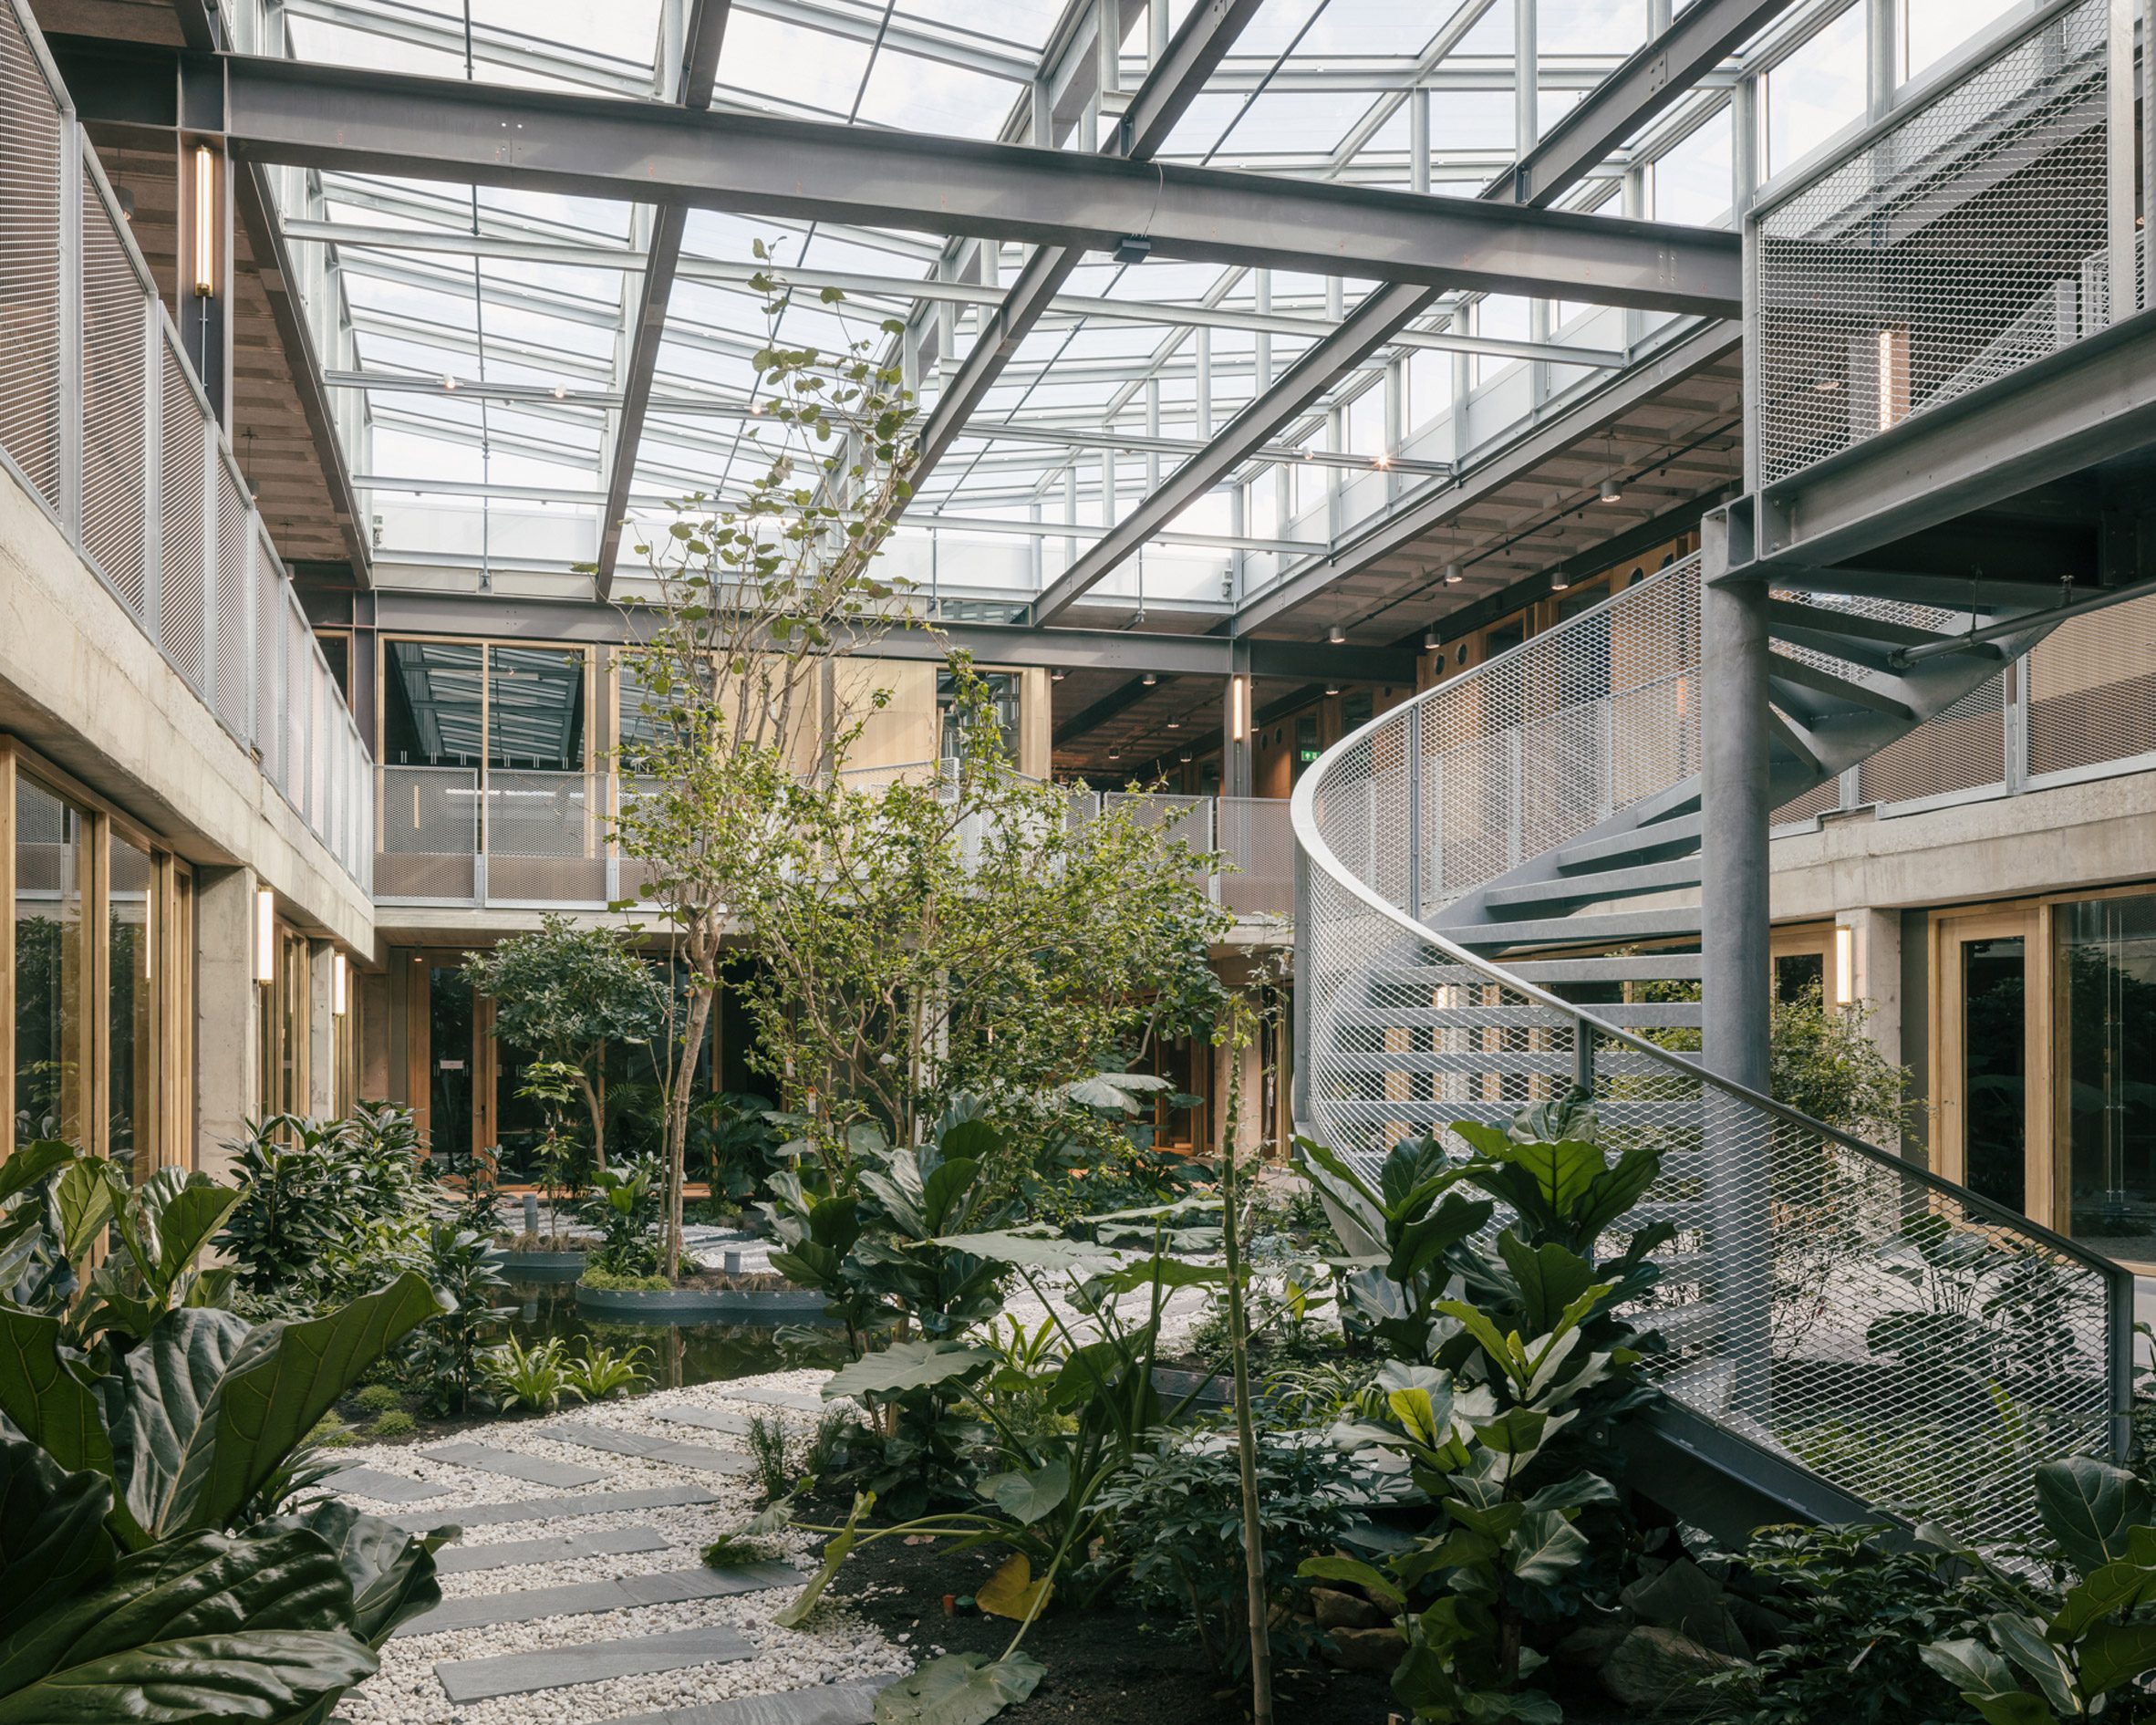 Atrium interior at ITC university in the Netherlands